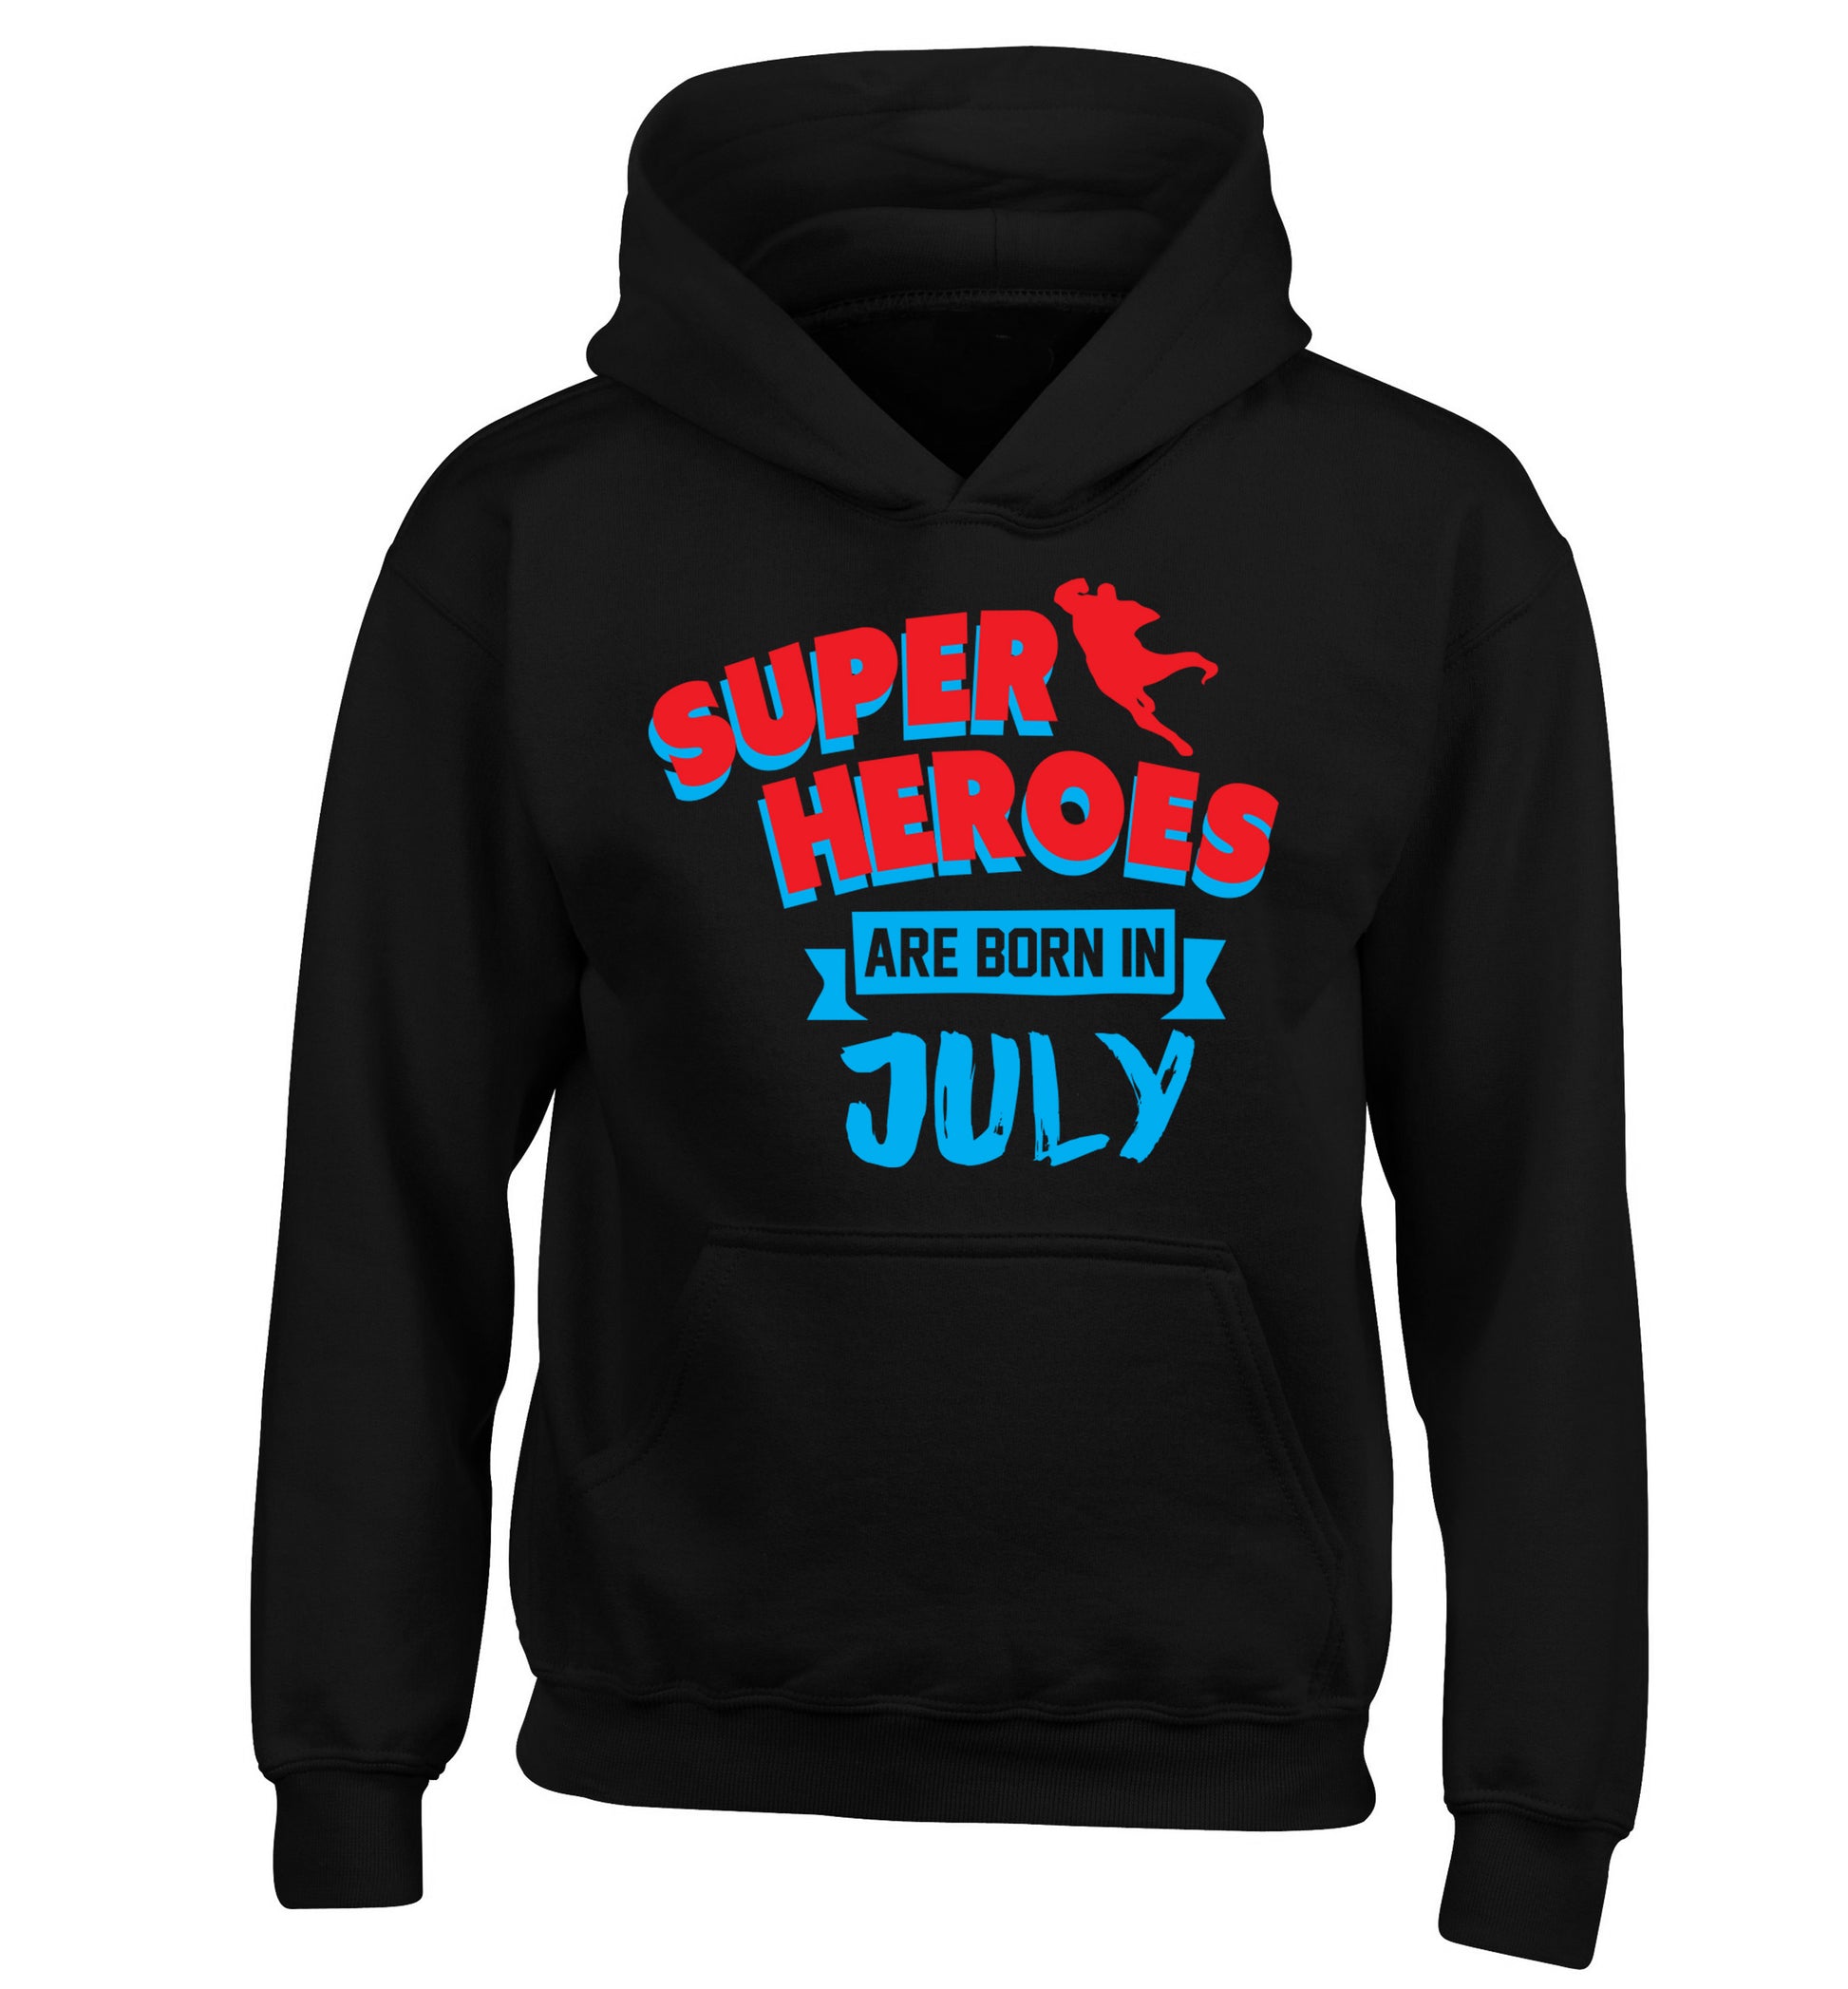 Superheroes are born in July children's black hoodie 12-13 Years